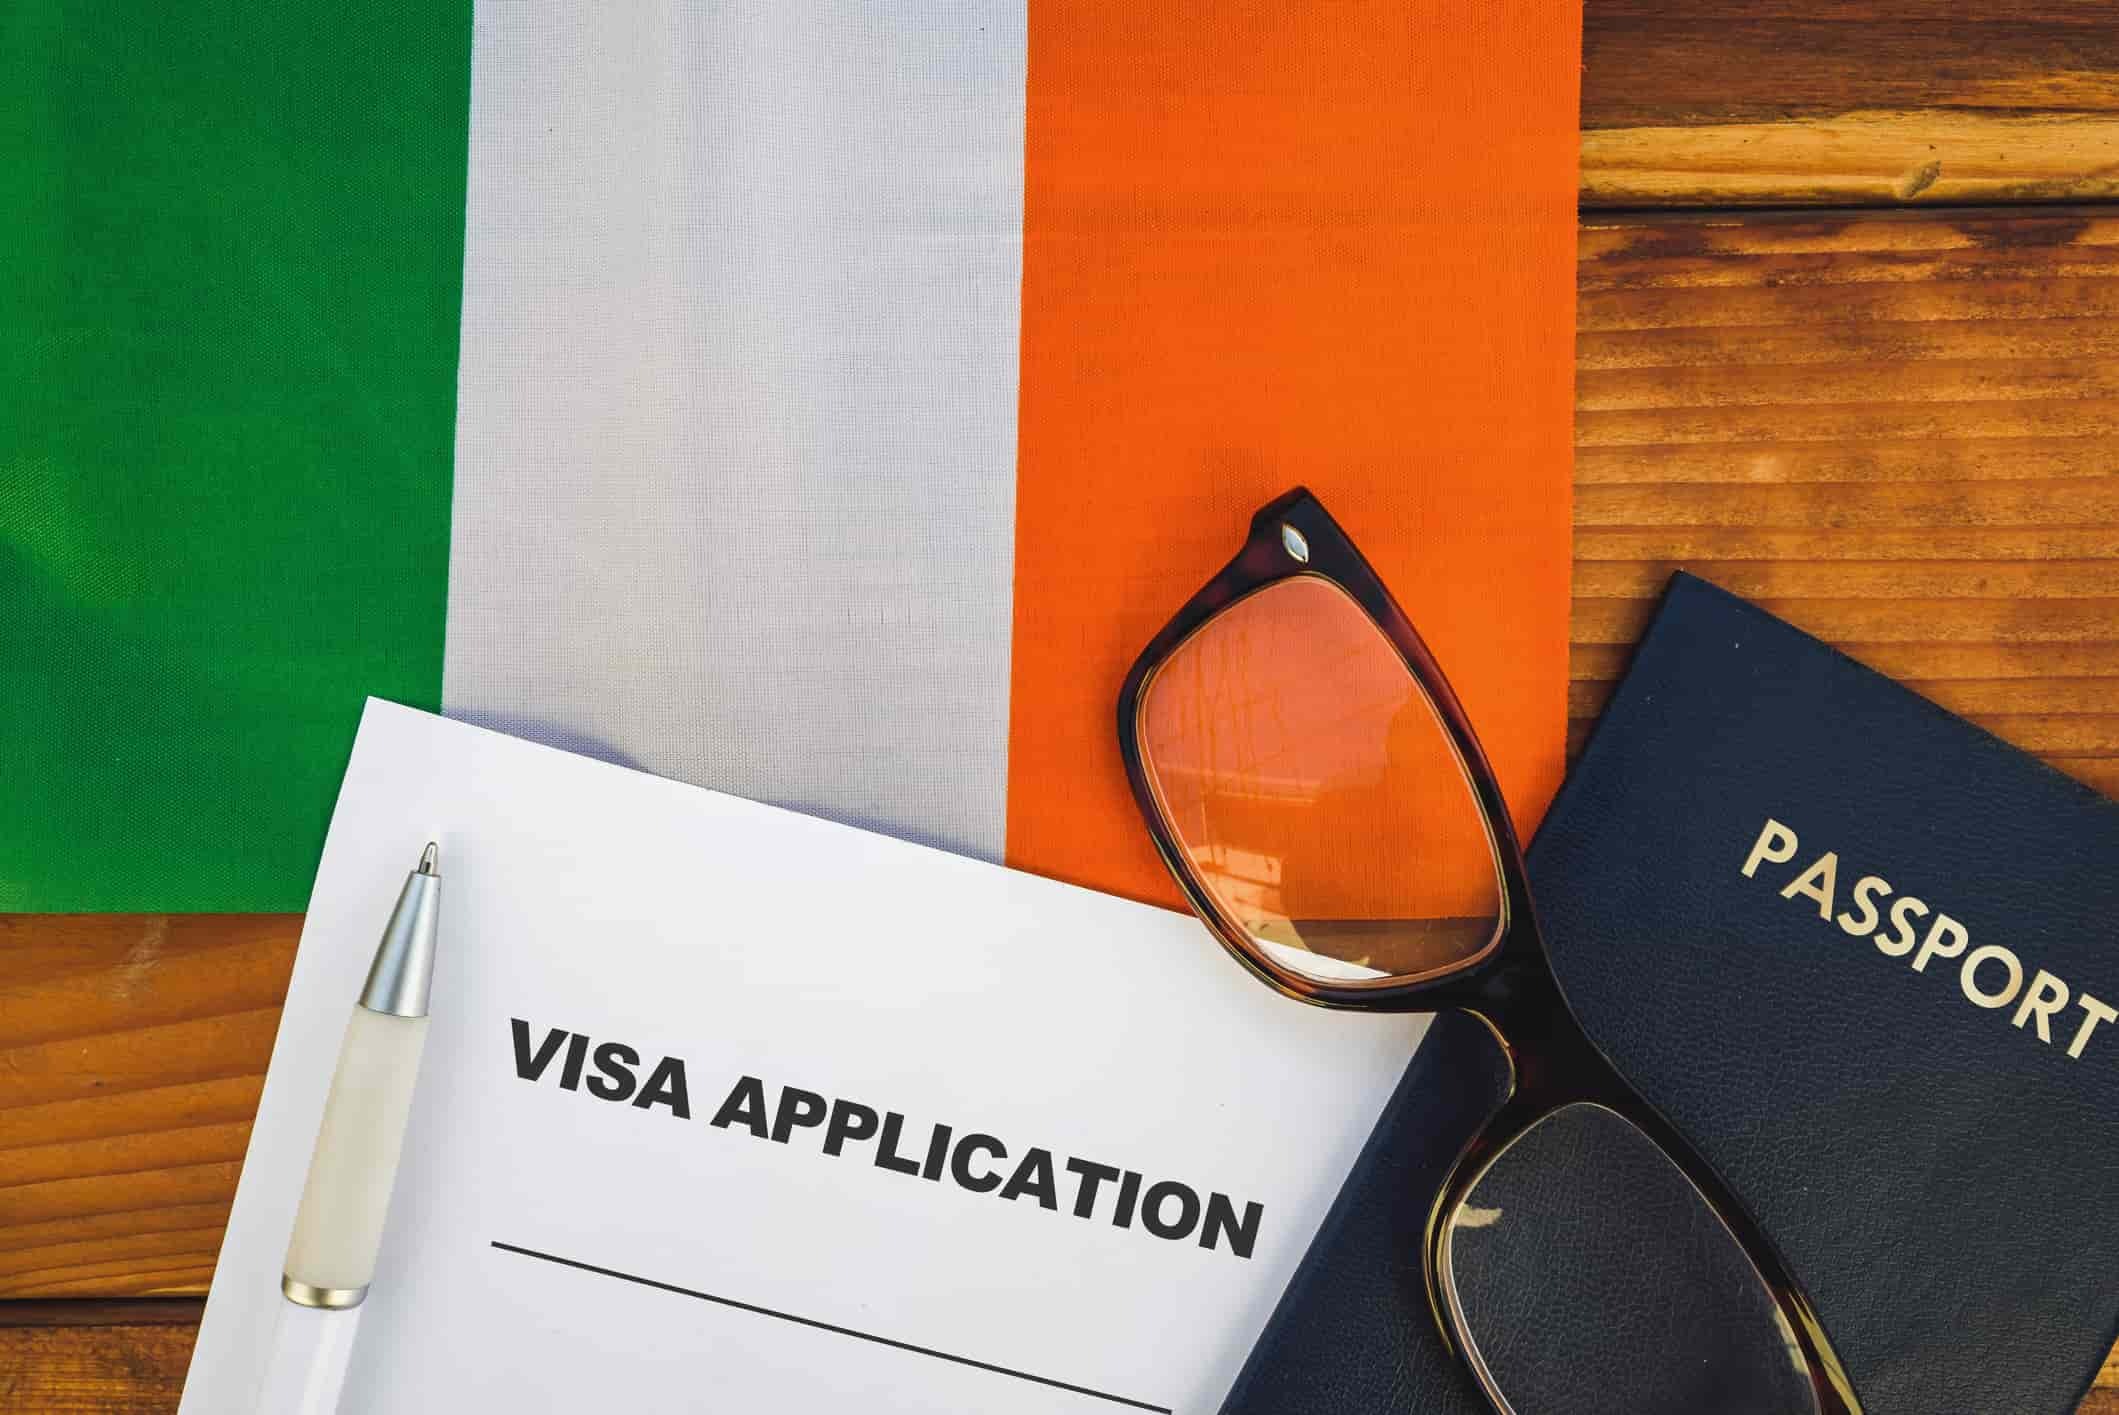 Irish flag, visa application form and passport